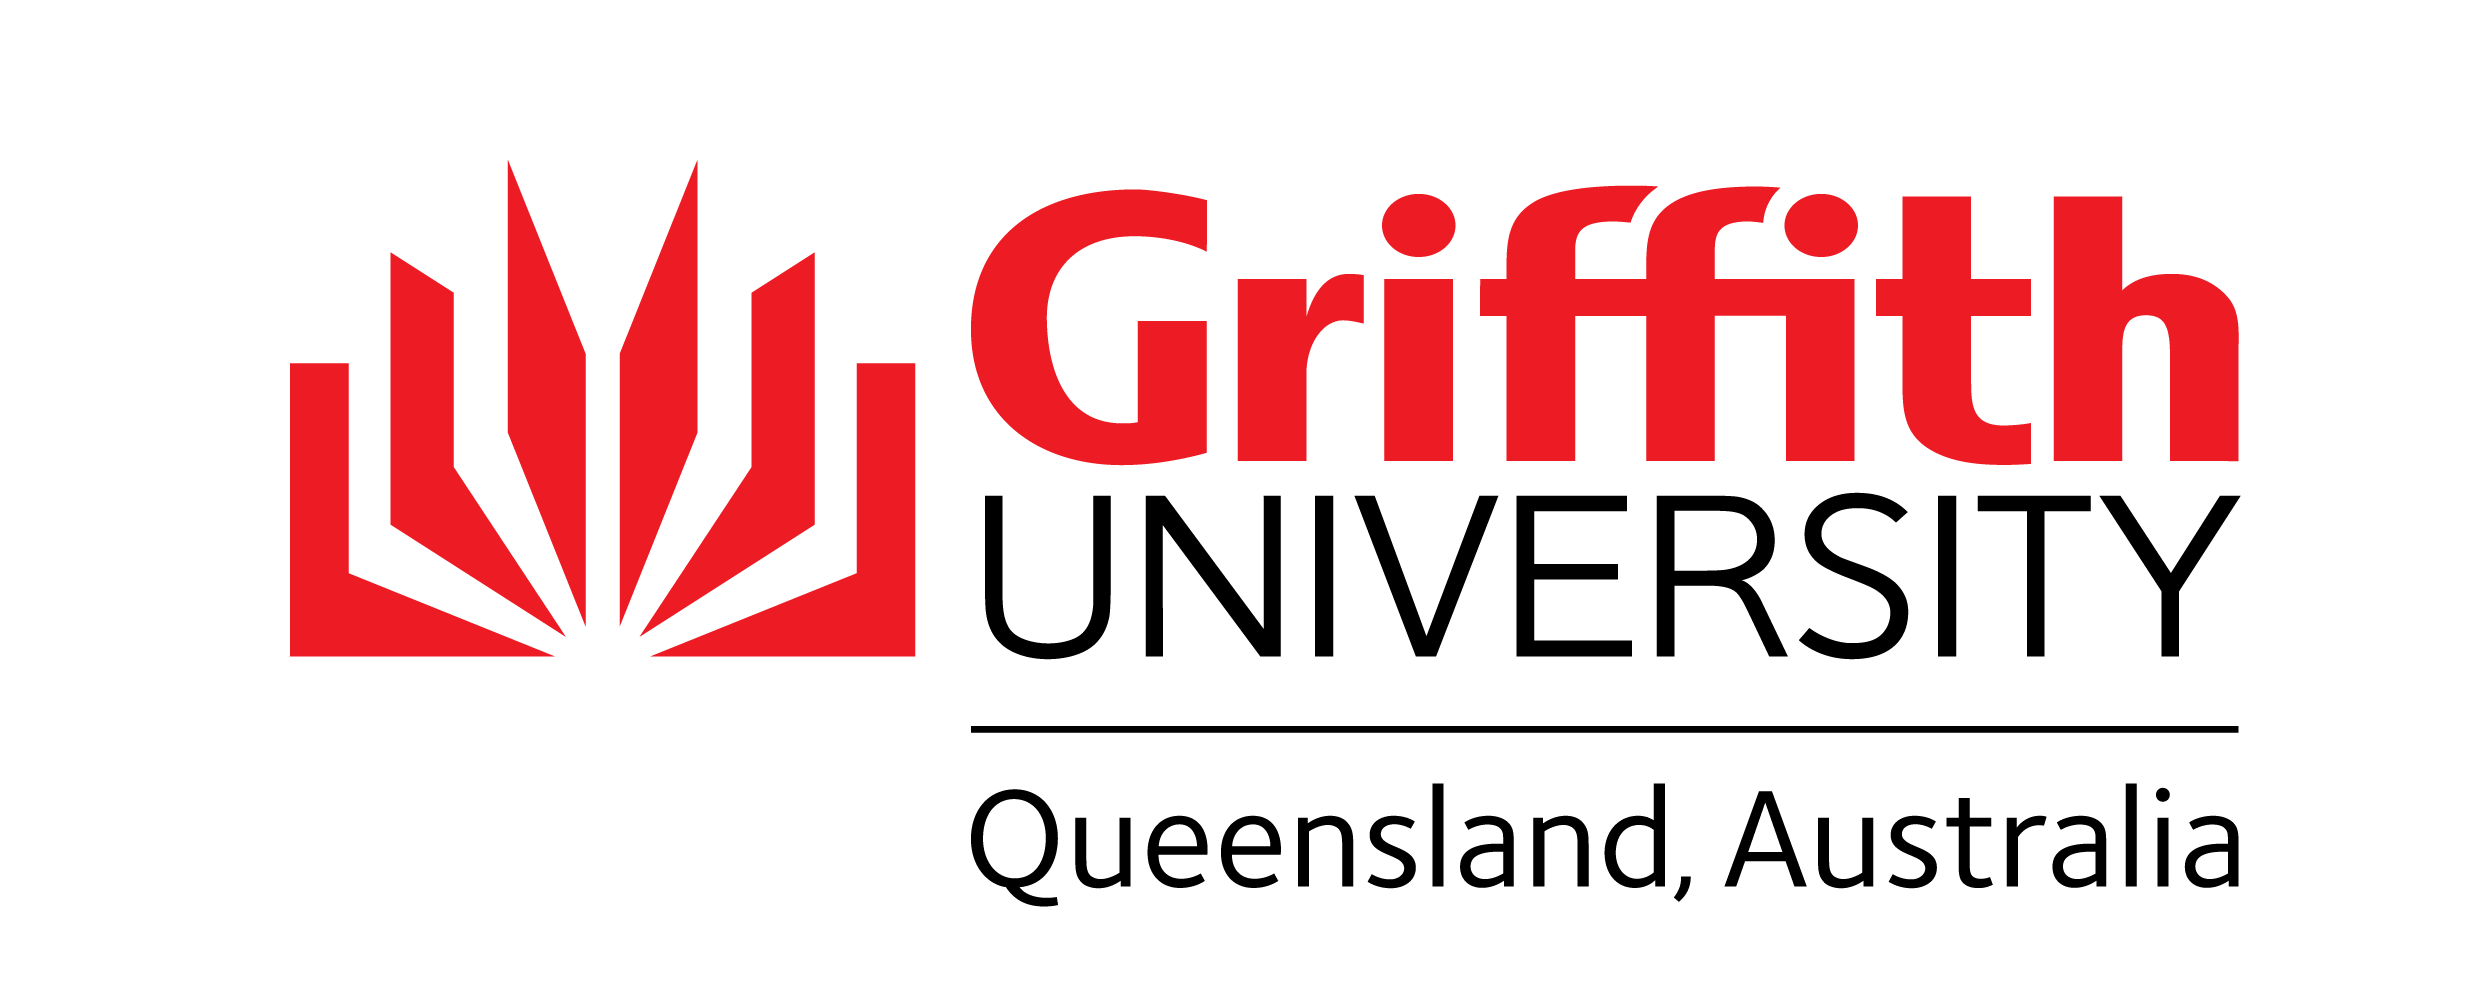 GRIFFITH-Logo